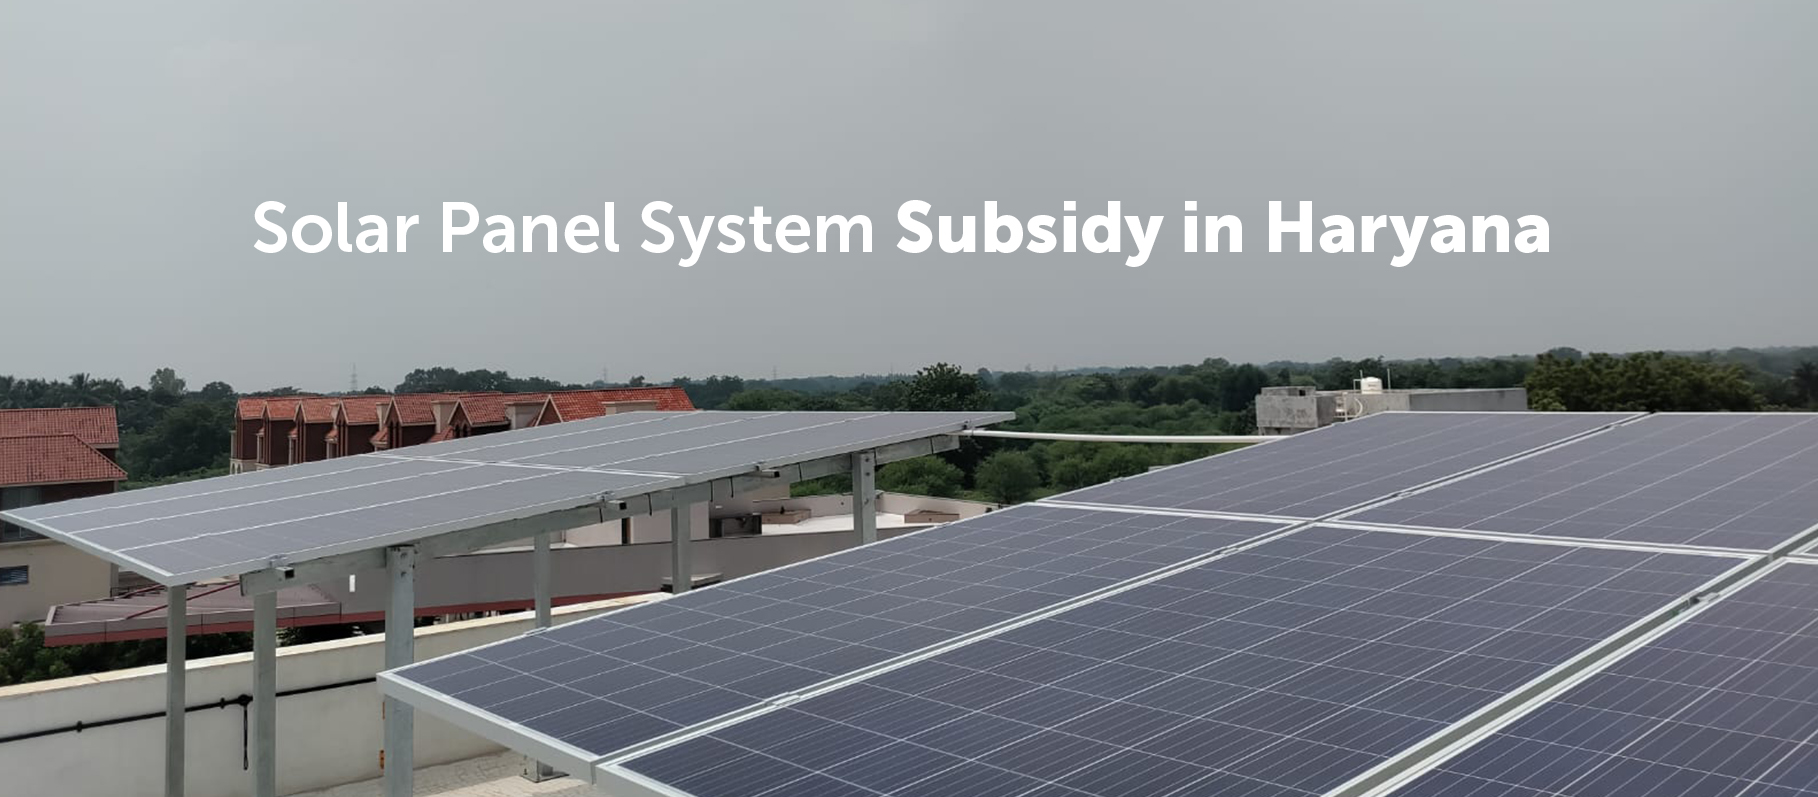 Solar Panel System subsidy in Haryana